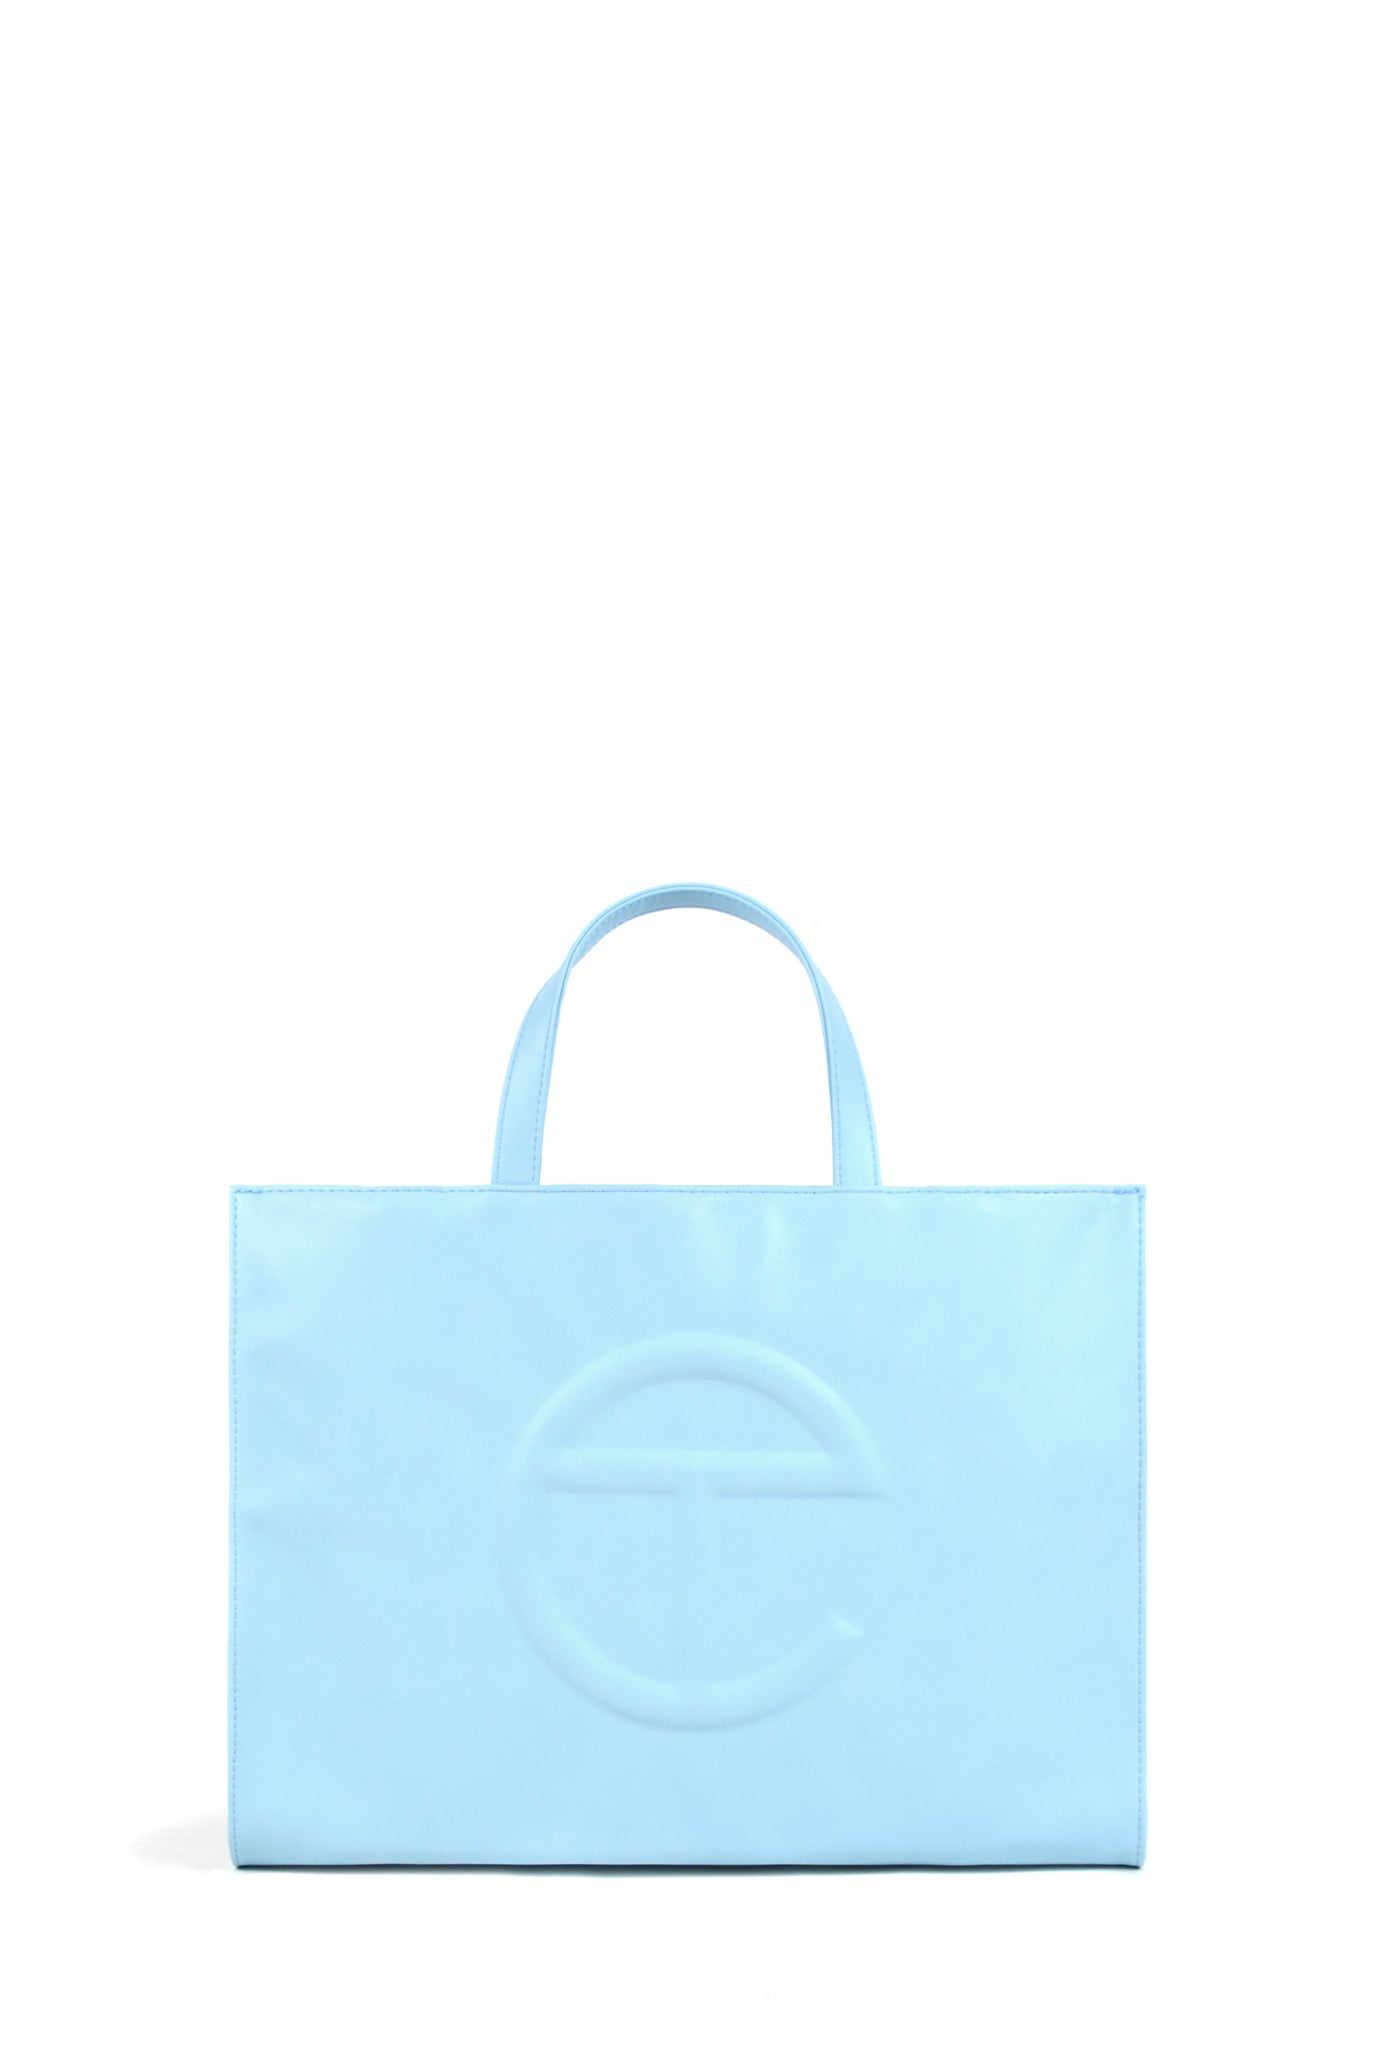 telfar bag blue